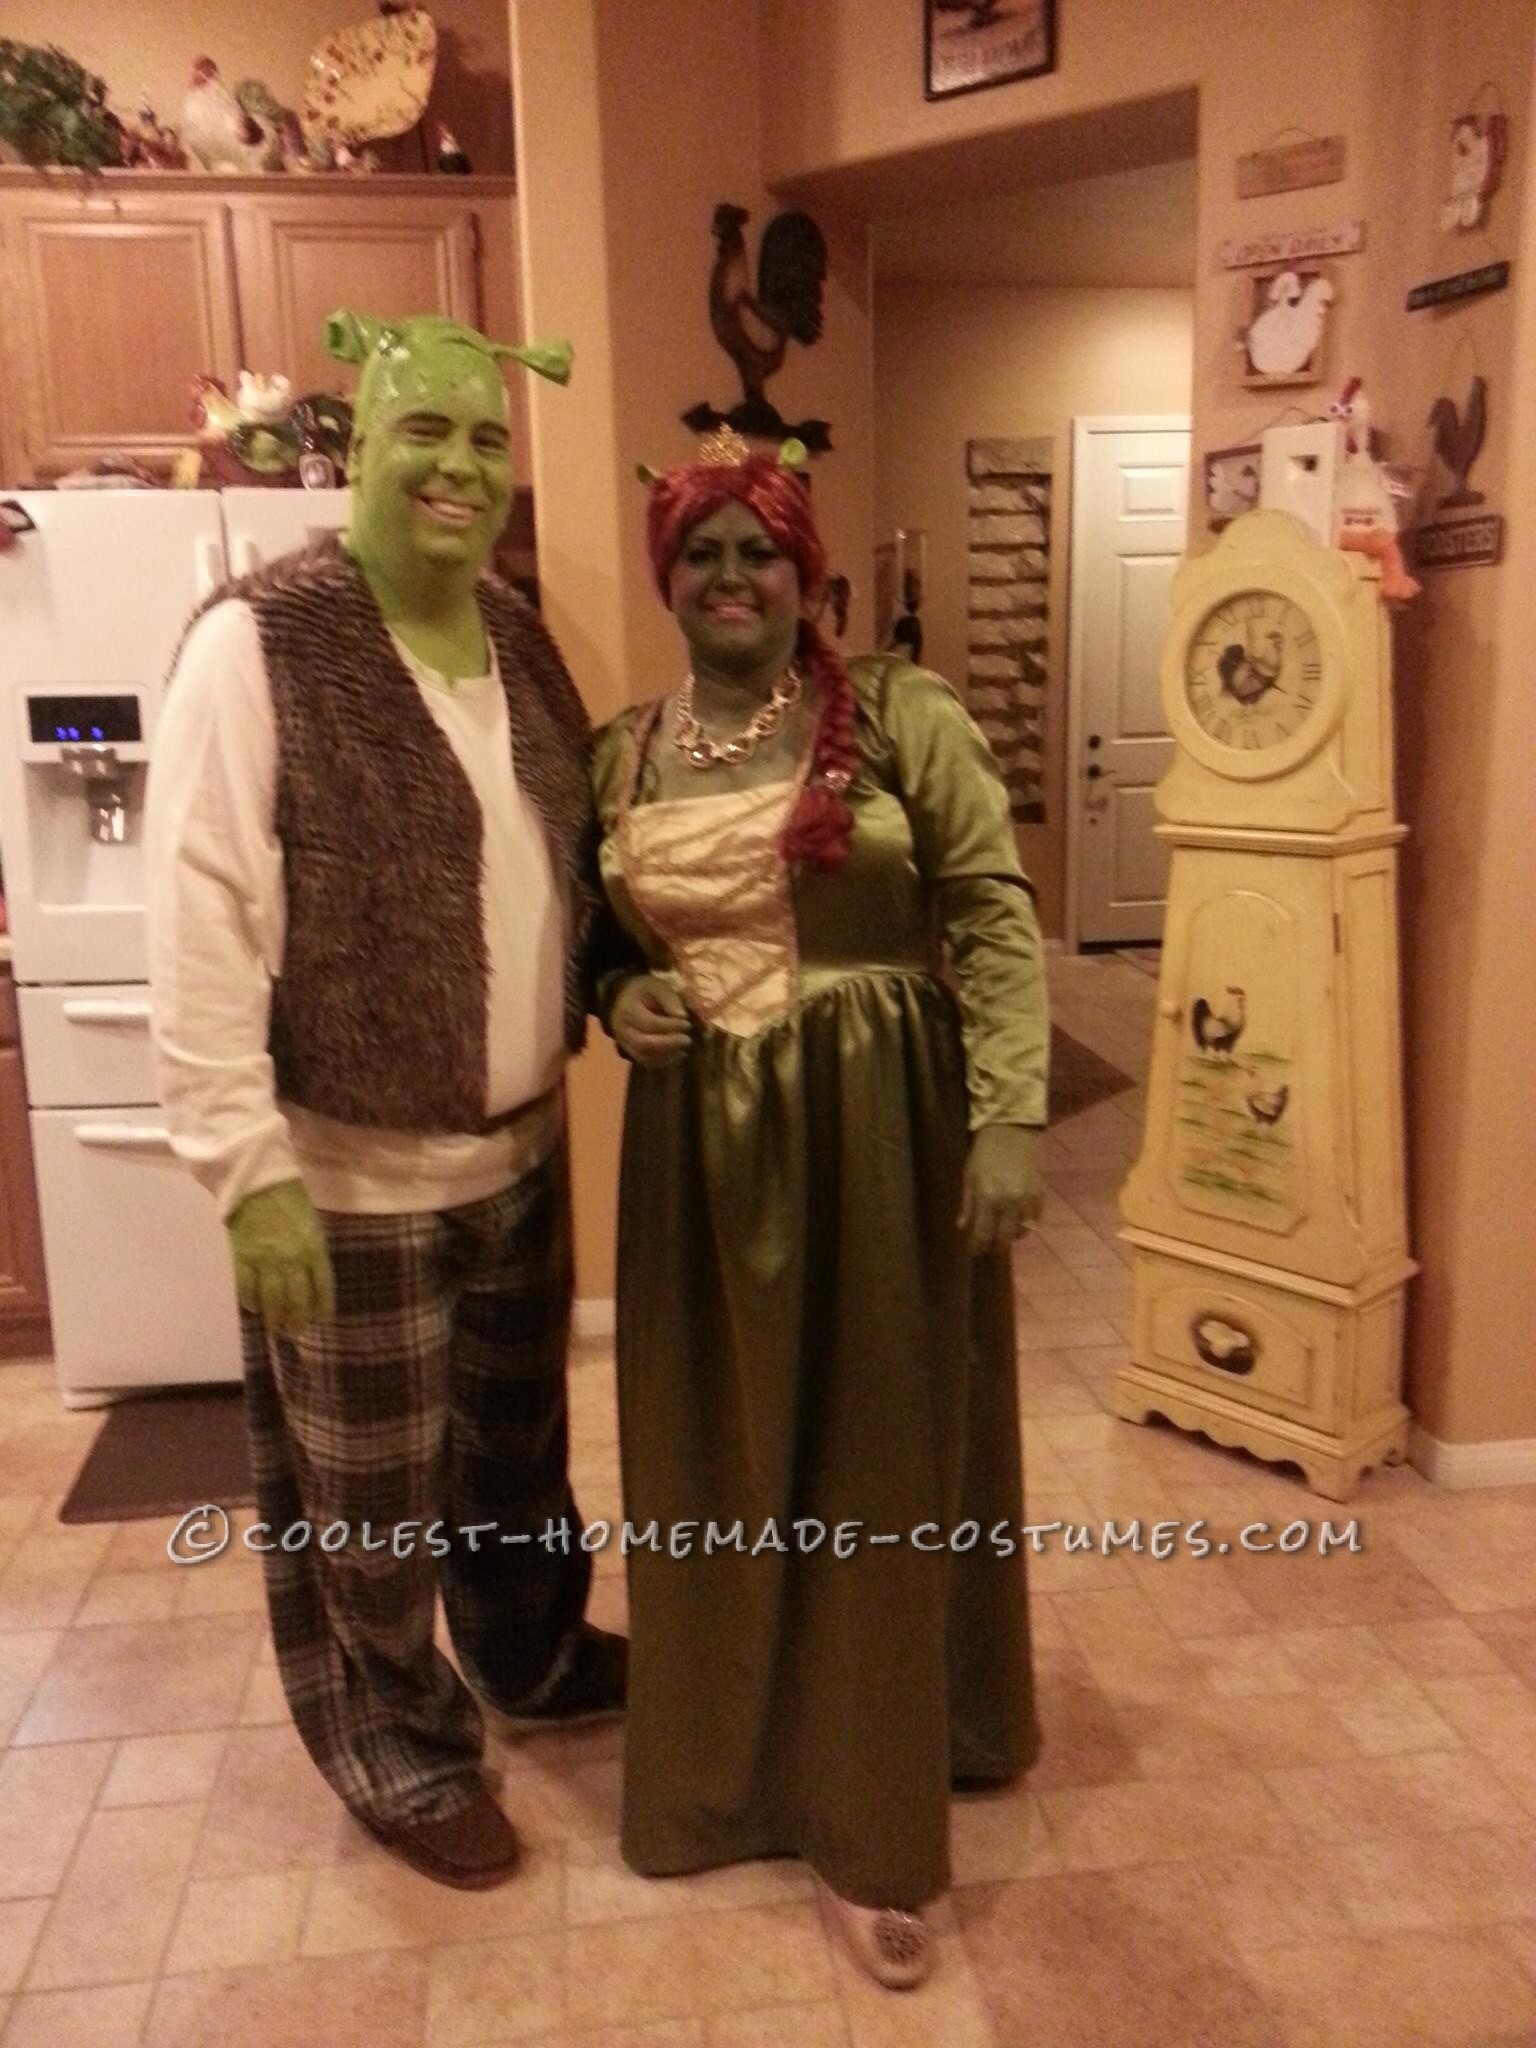 Awesome Homemade Plus-Size Fiona and Shrek Costume